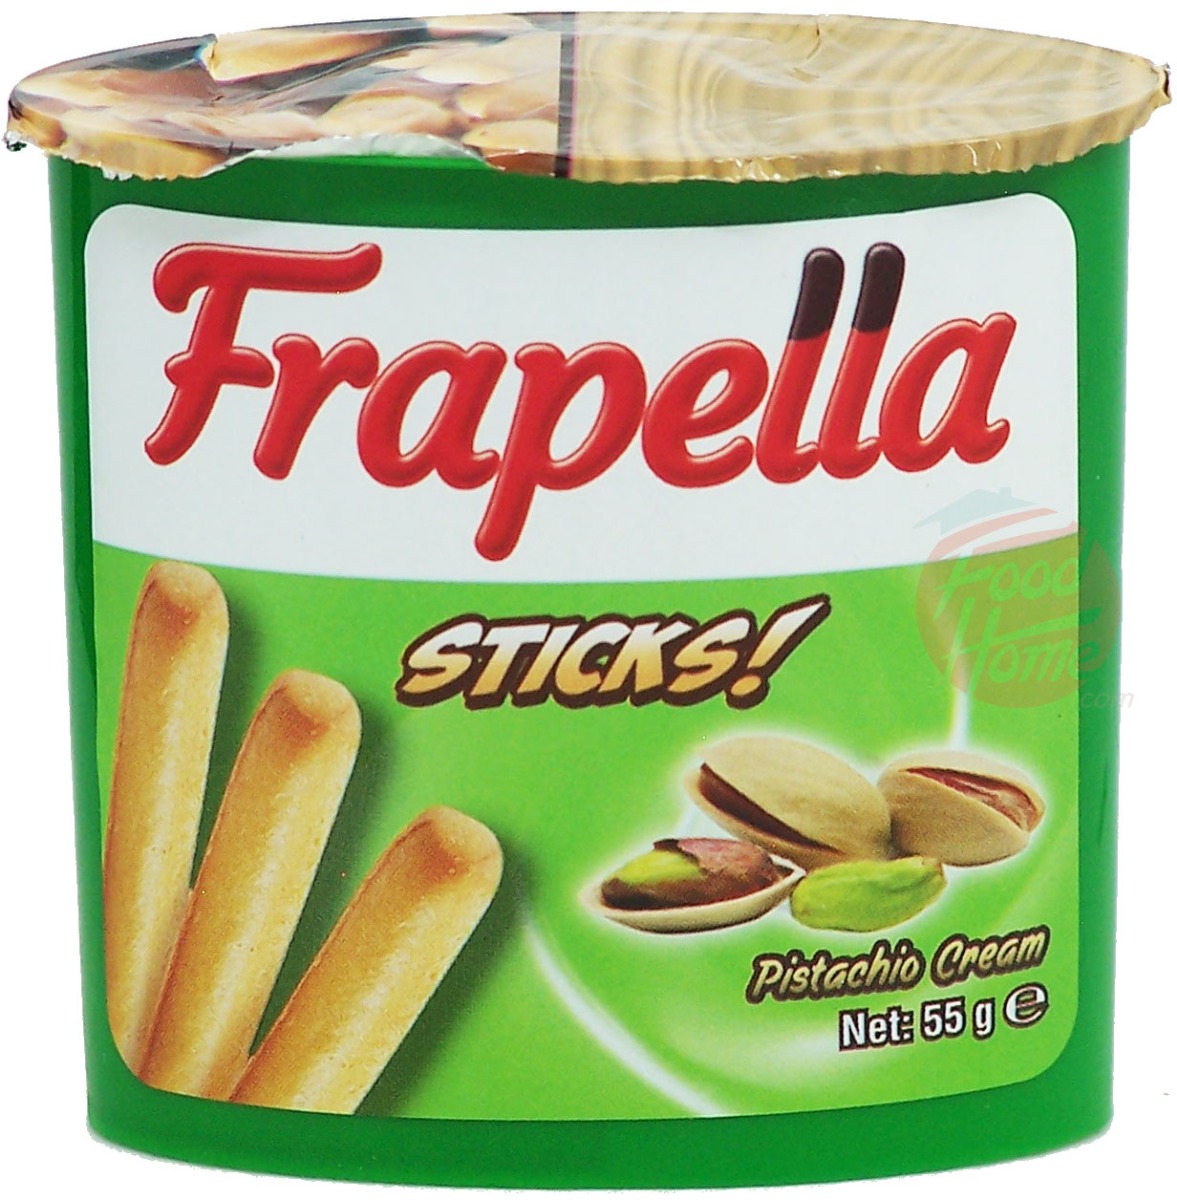 Frapella Sticks! bread sticks with pistachio cream, 55-gram shaped plastic (case of 24)